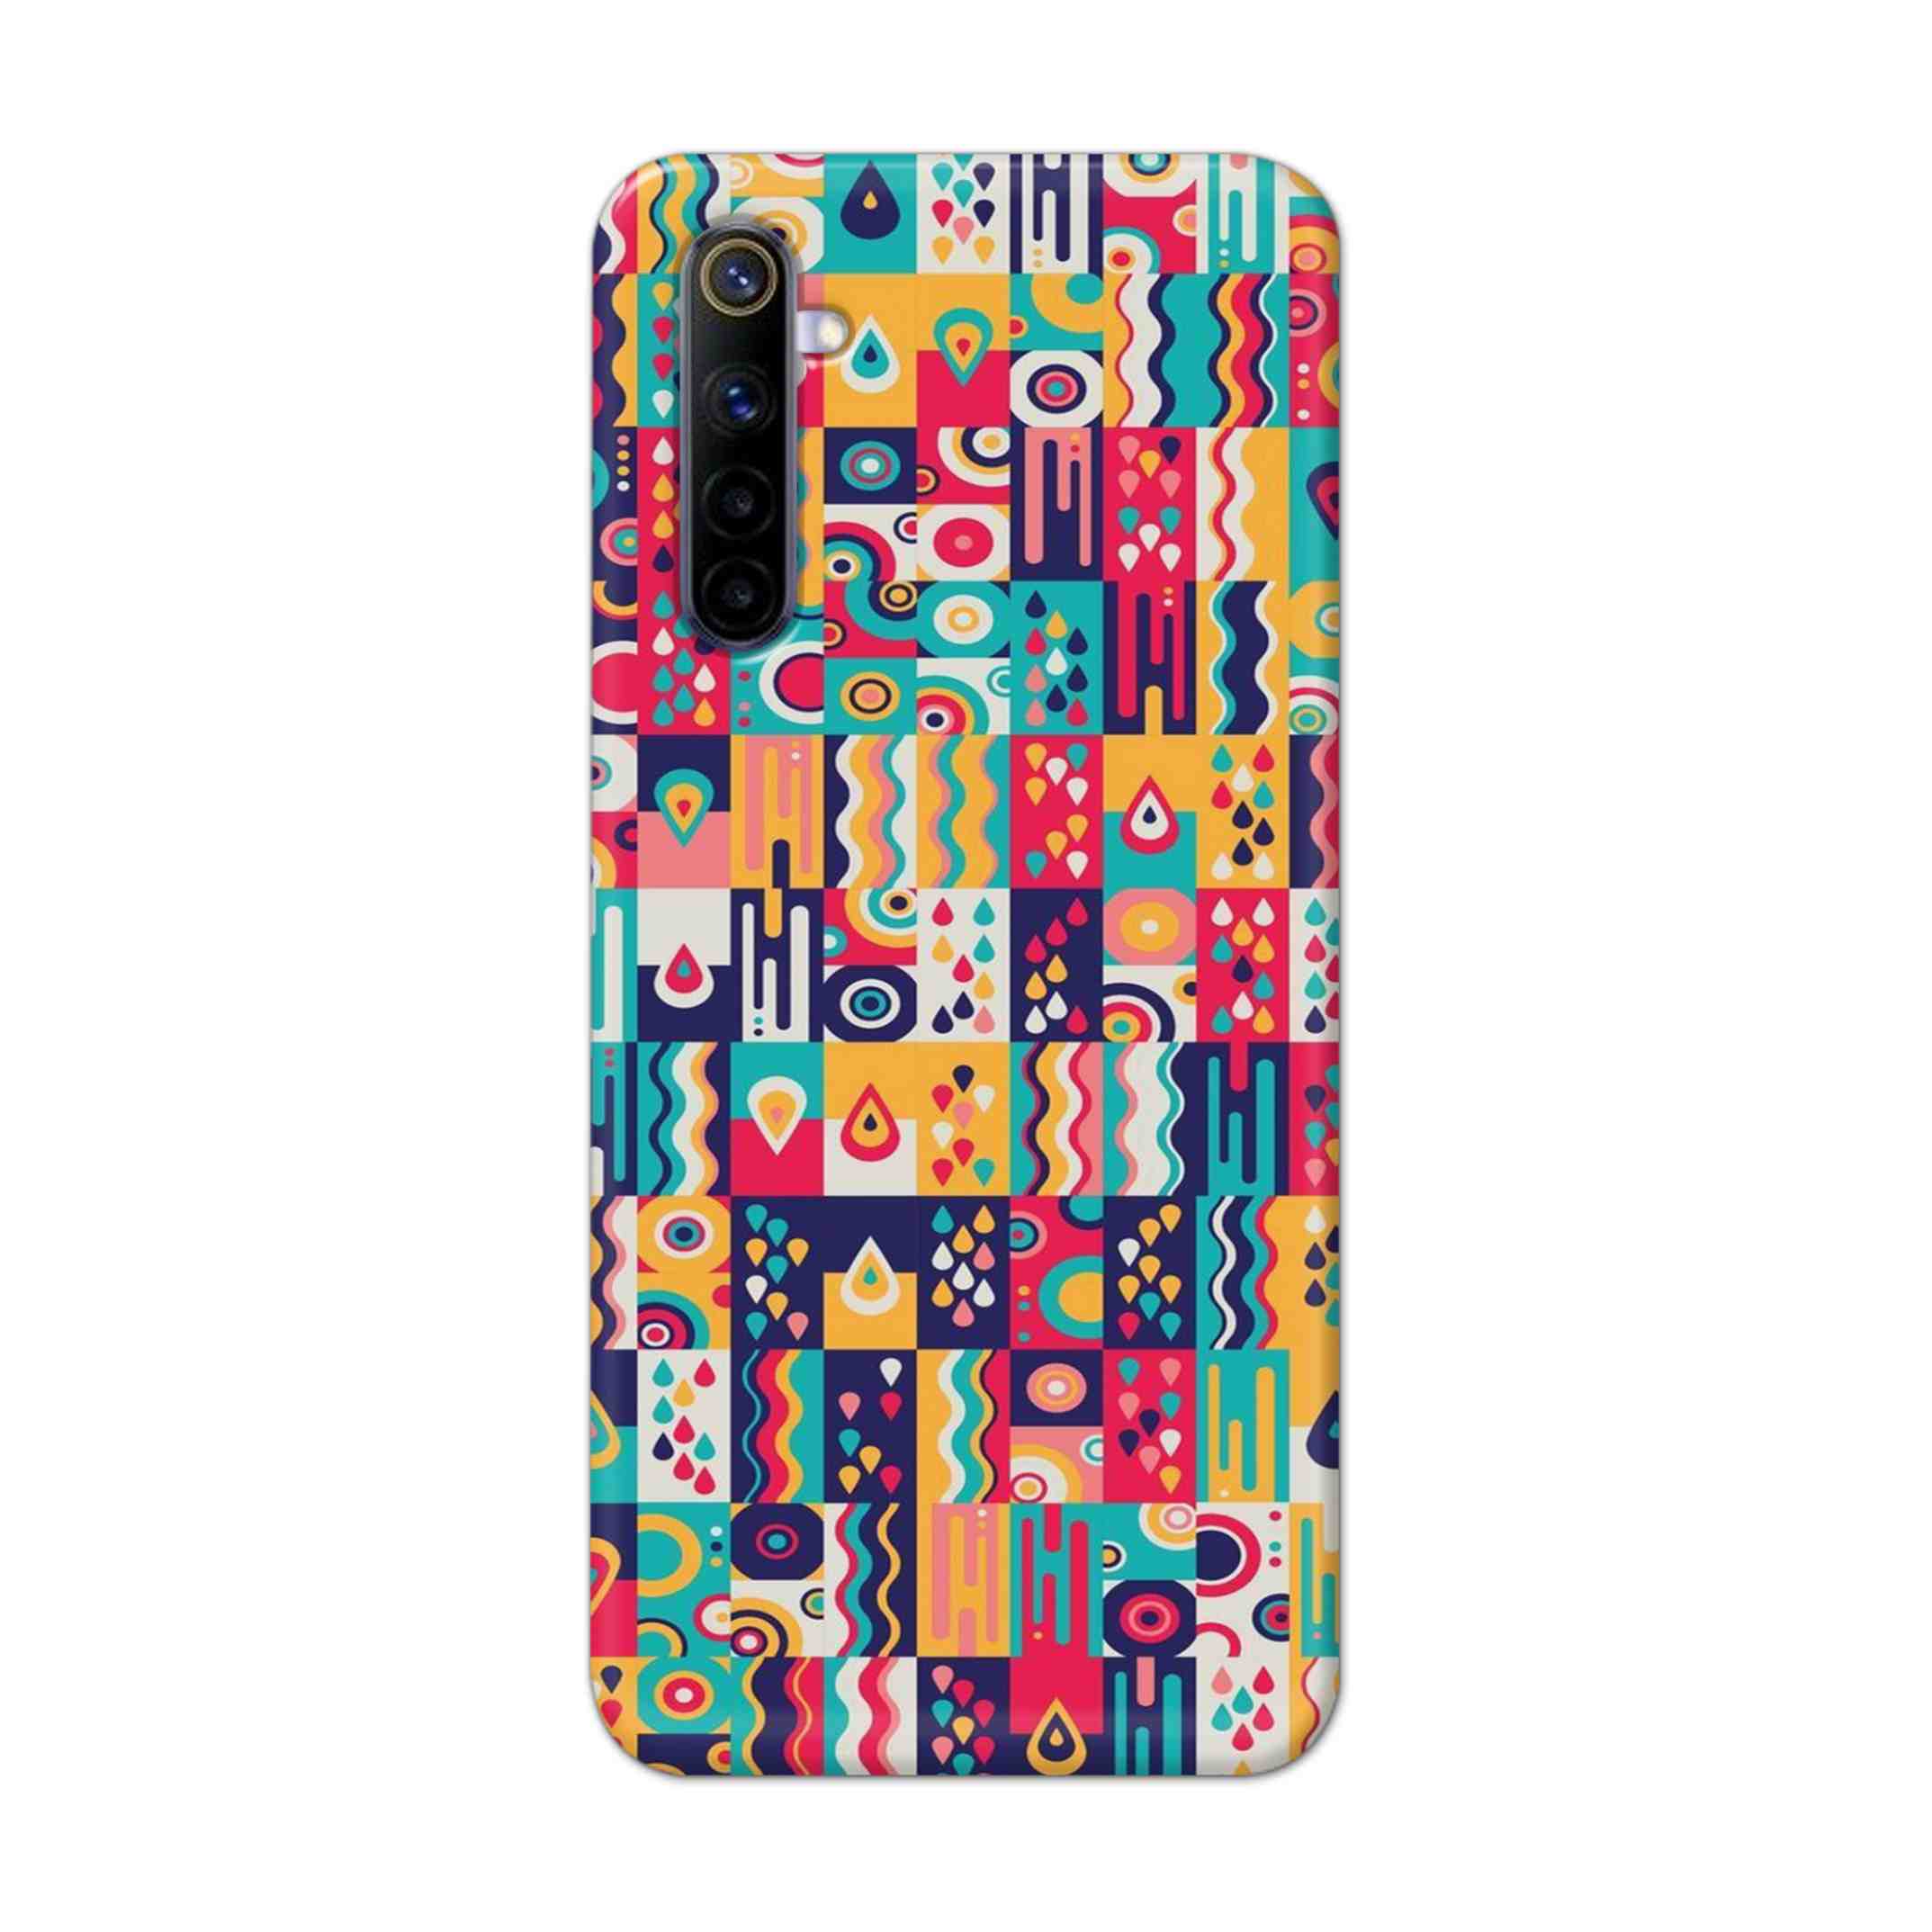 Buy Art Hard Back Mobile Phone Case Cover For REALME 6 Online